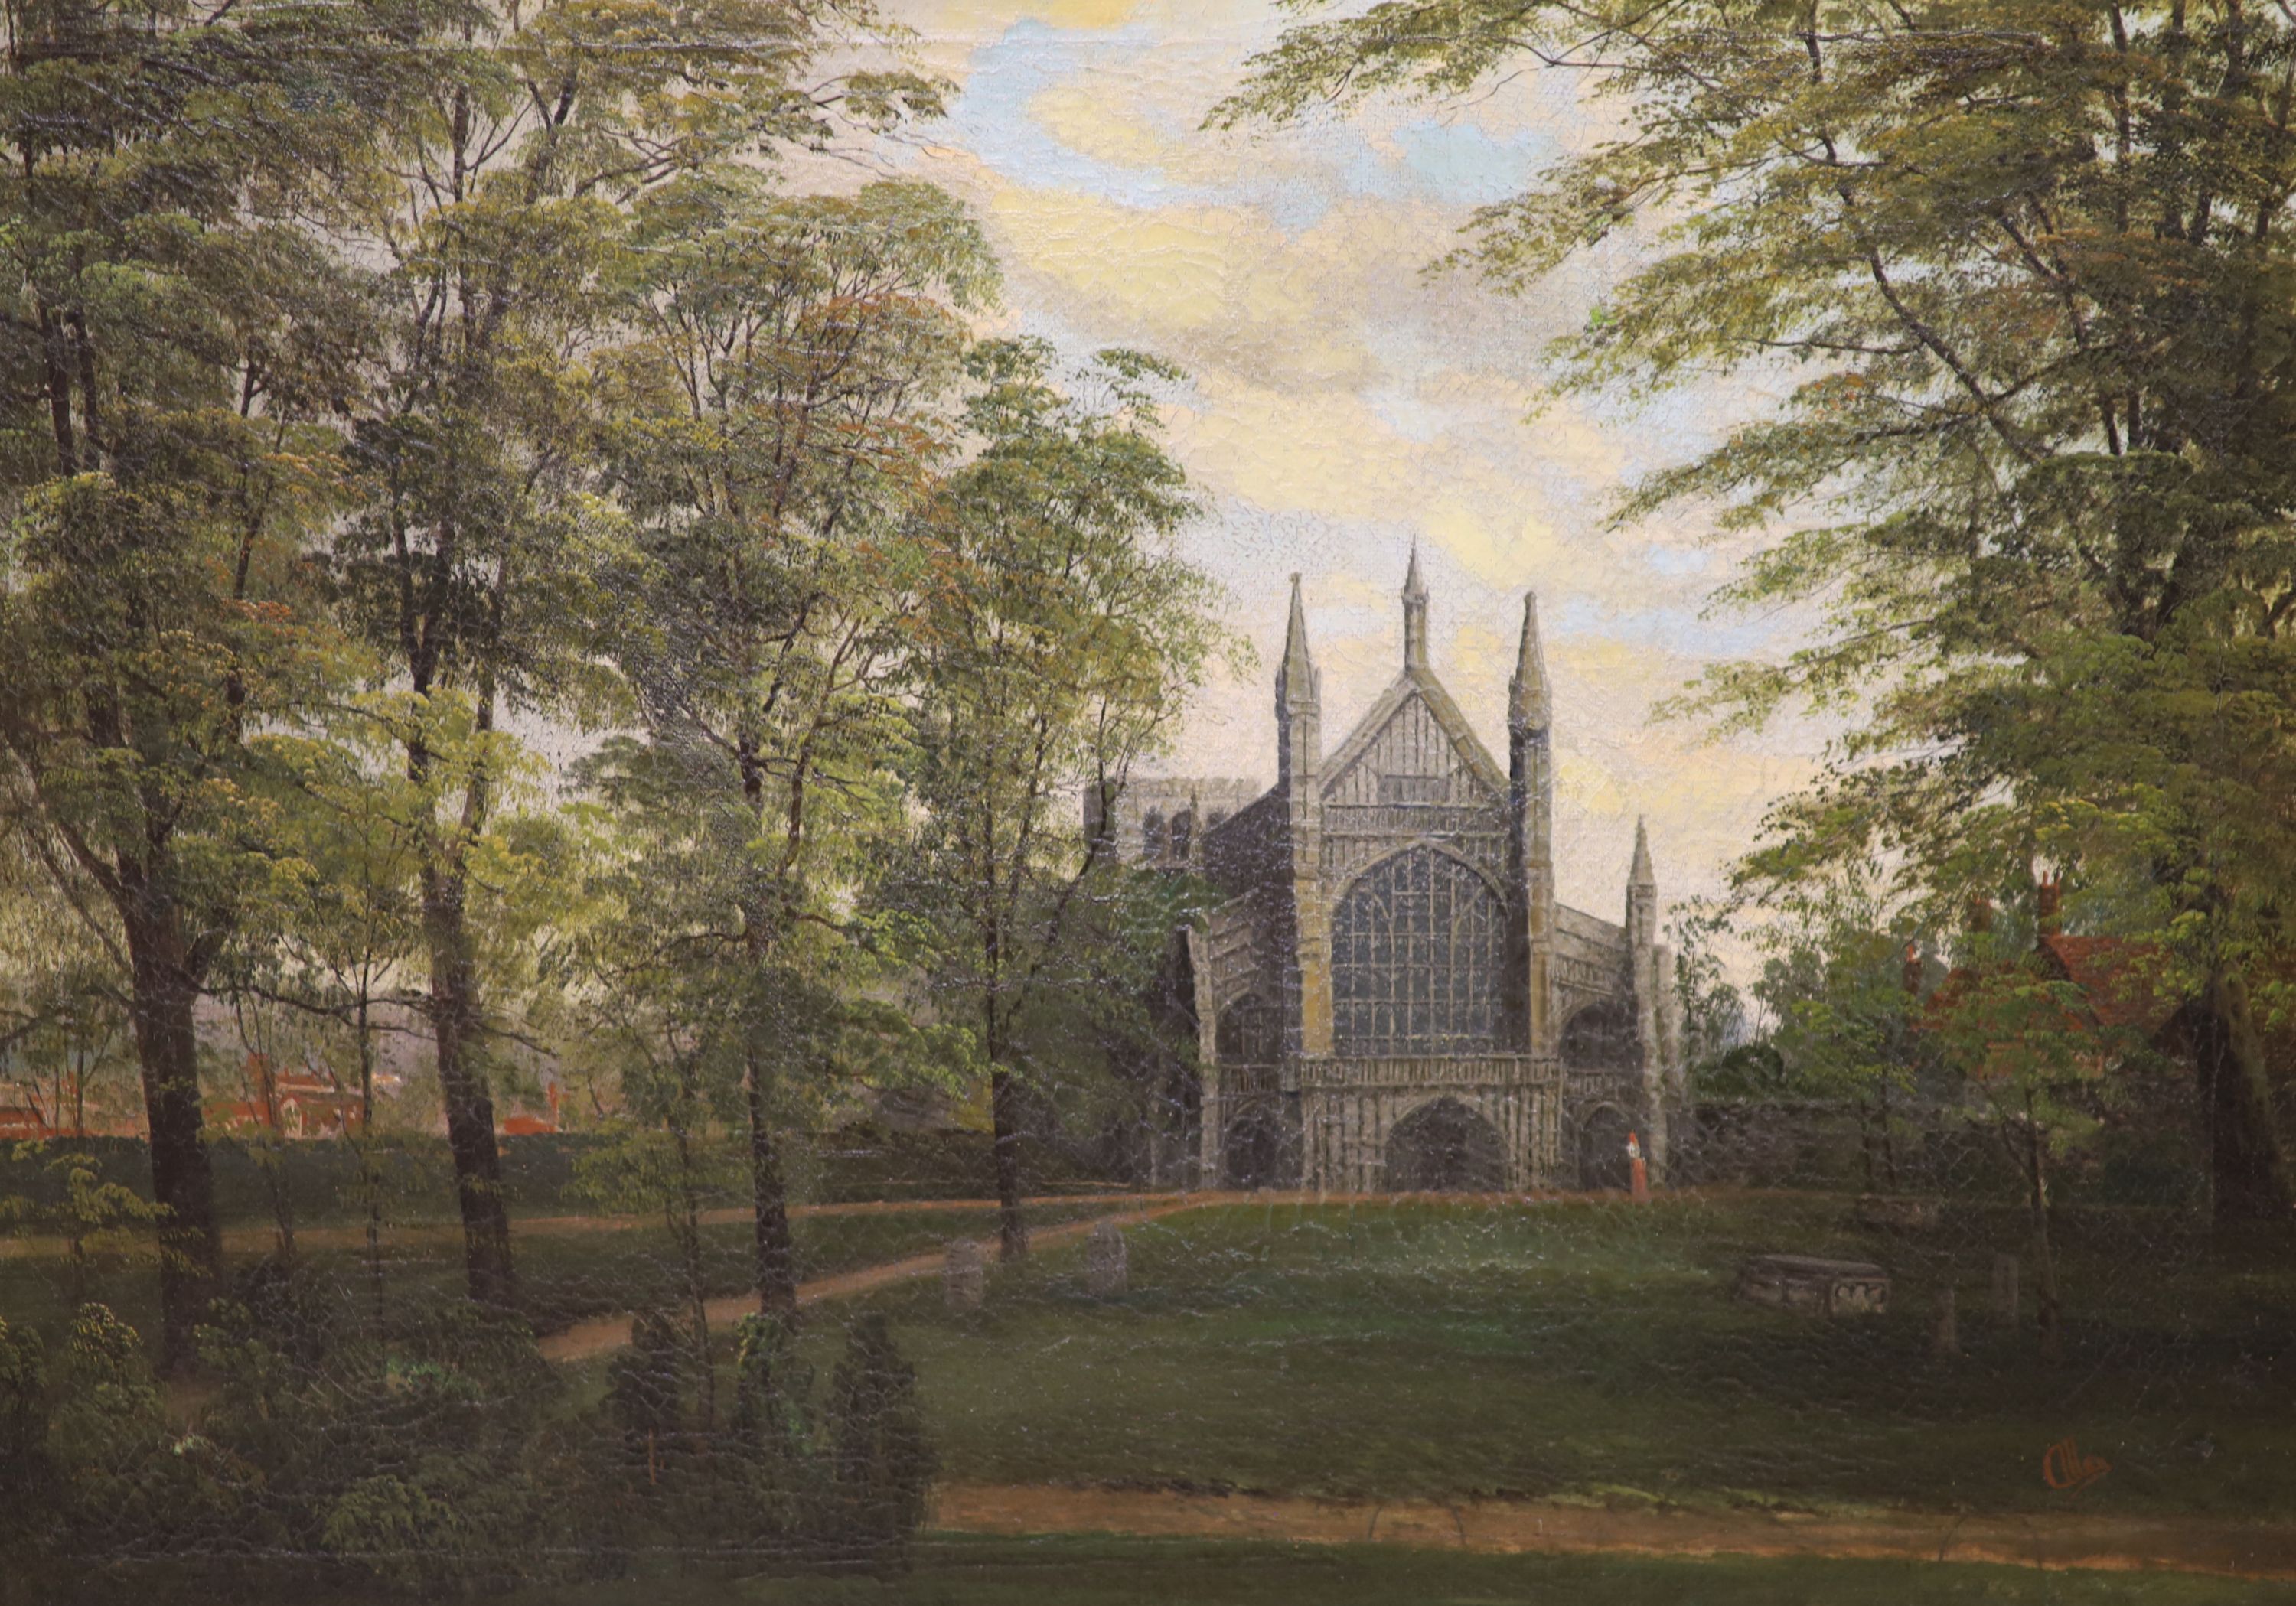 Allan (19th C.), oil on canvas, Church viewed through trees, signed, 40 x 55cm